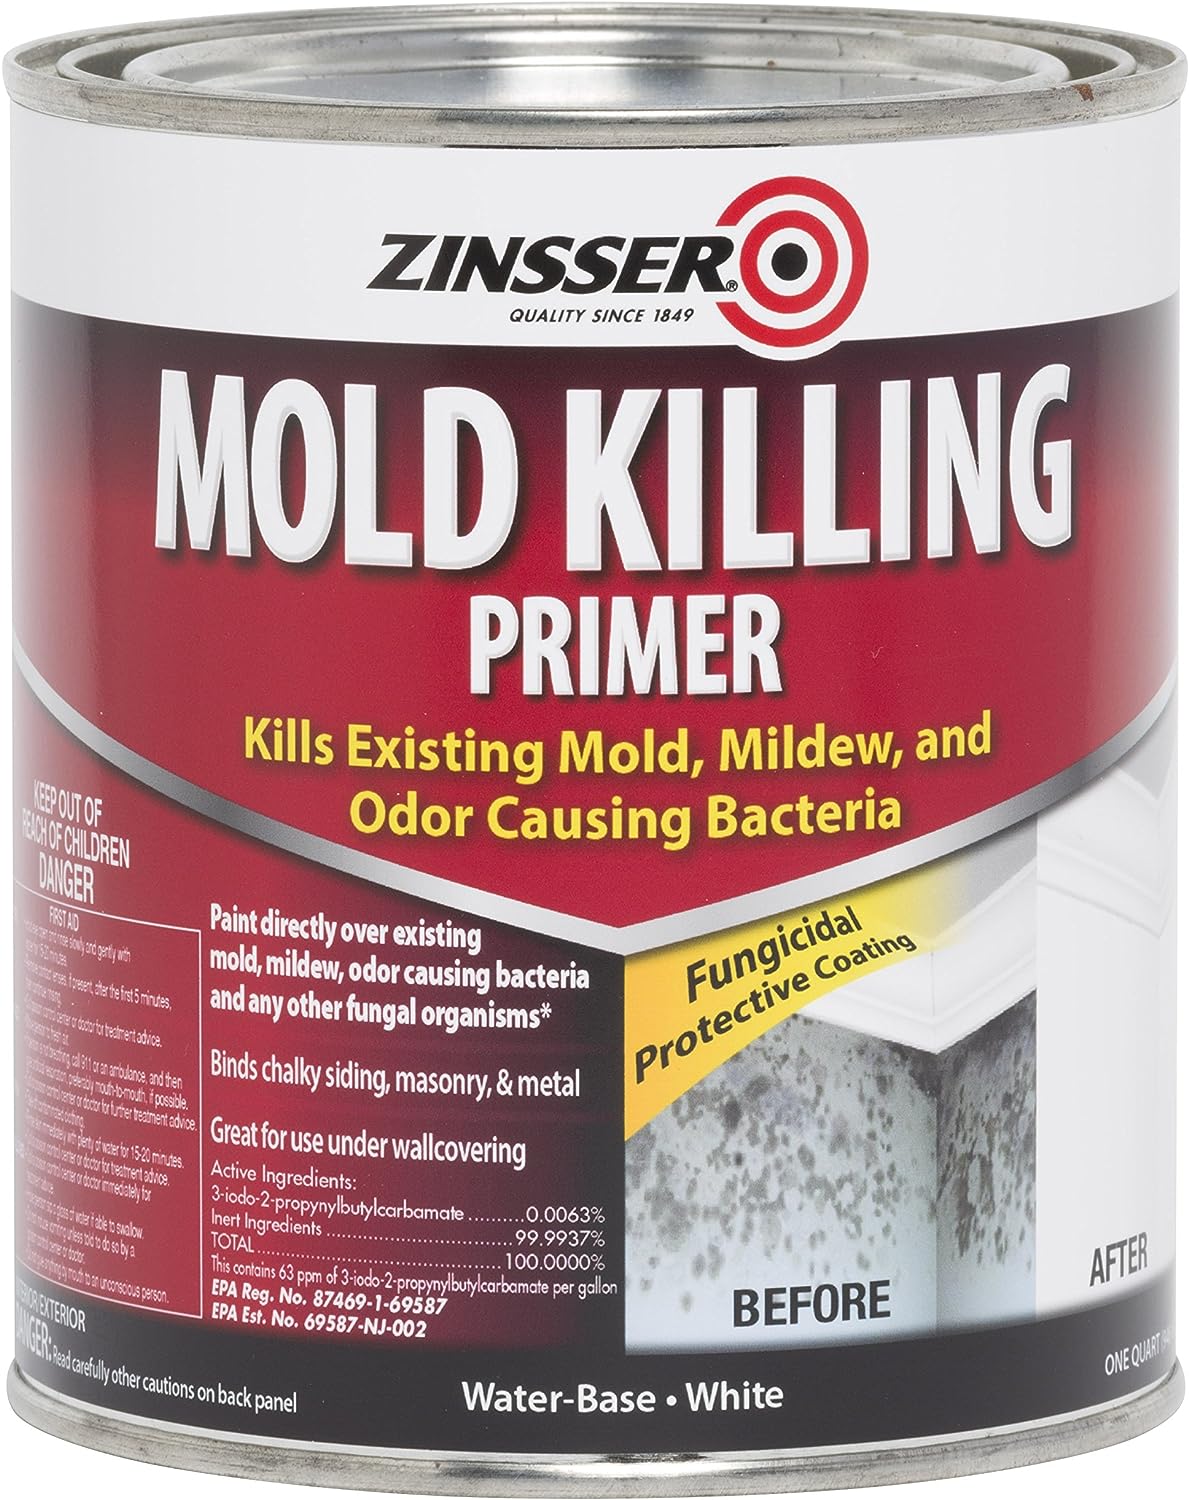 Zinsser 276087 Mold Killing Primer, Quart, White